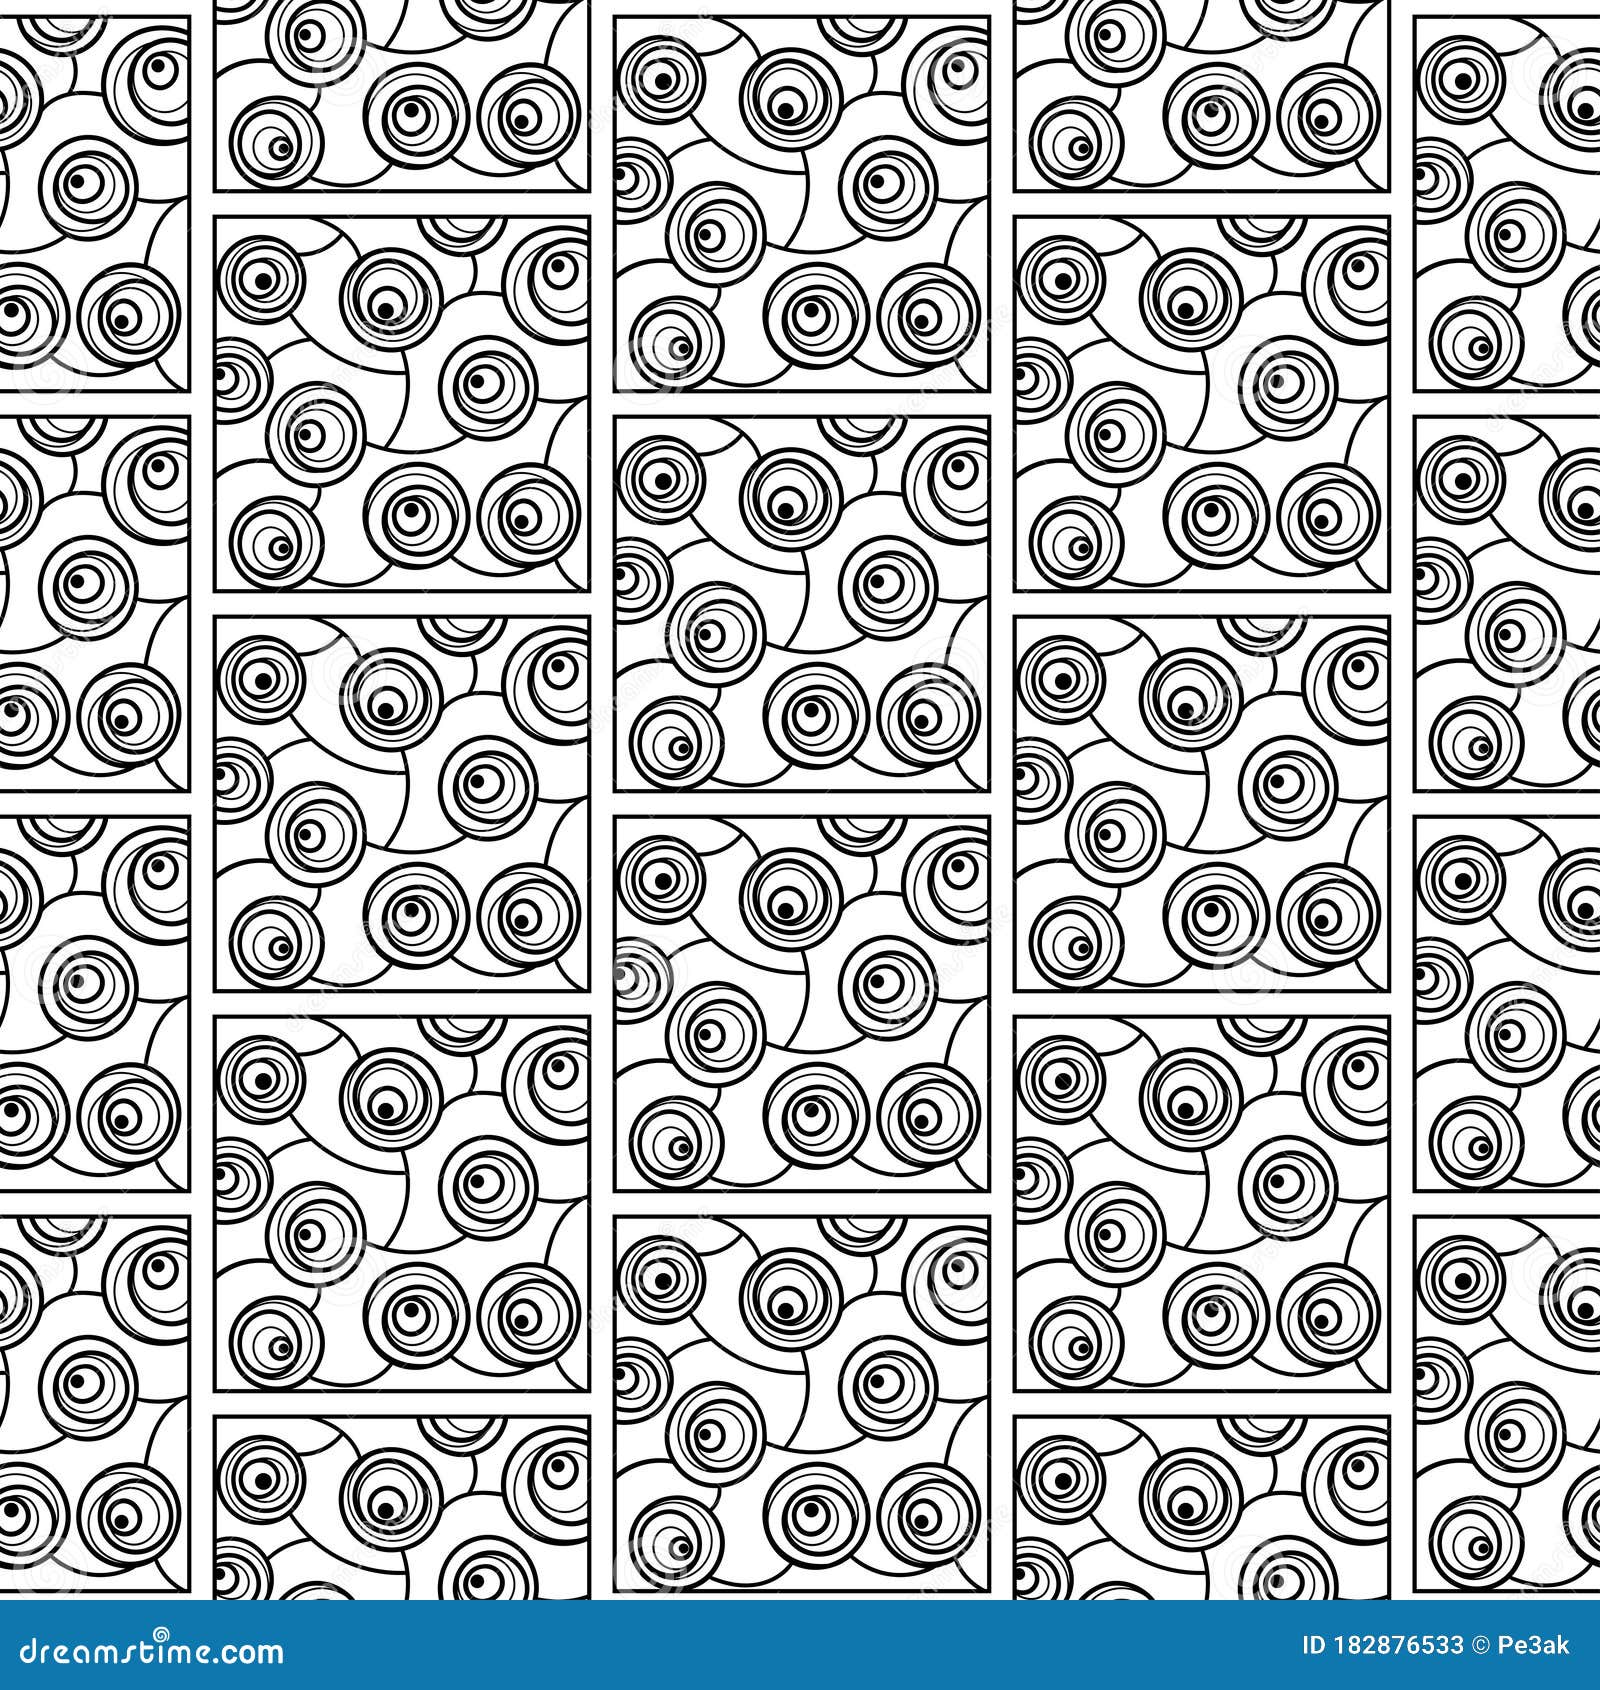 Vector doodle tile pattern stock vector. Illustration of black - 182876533